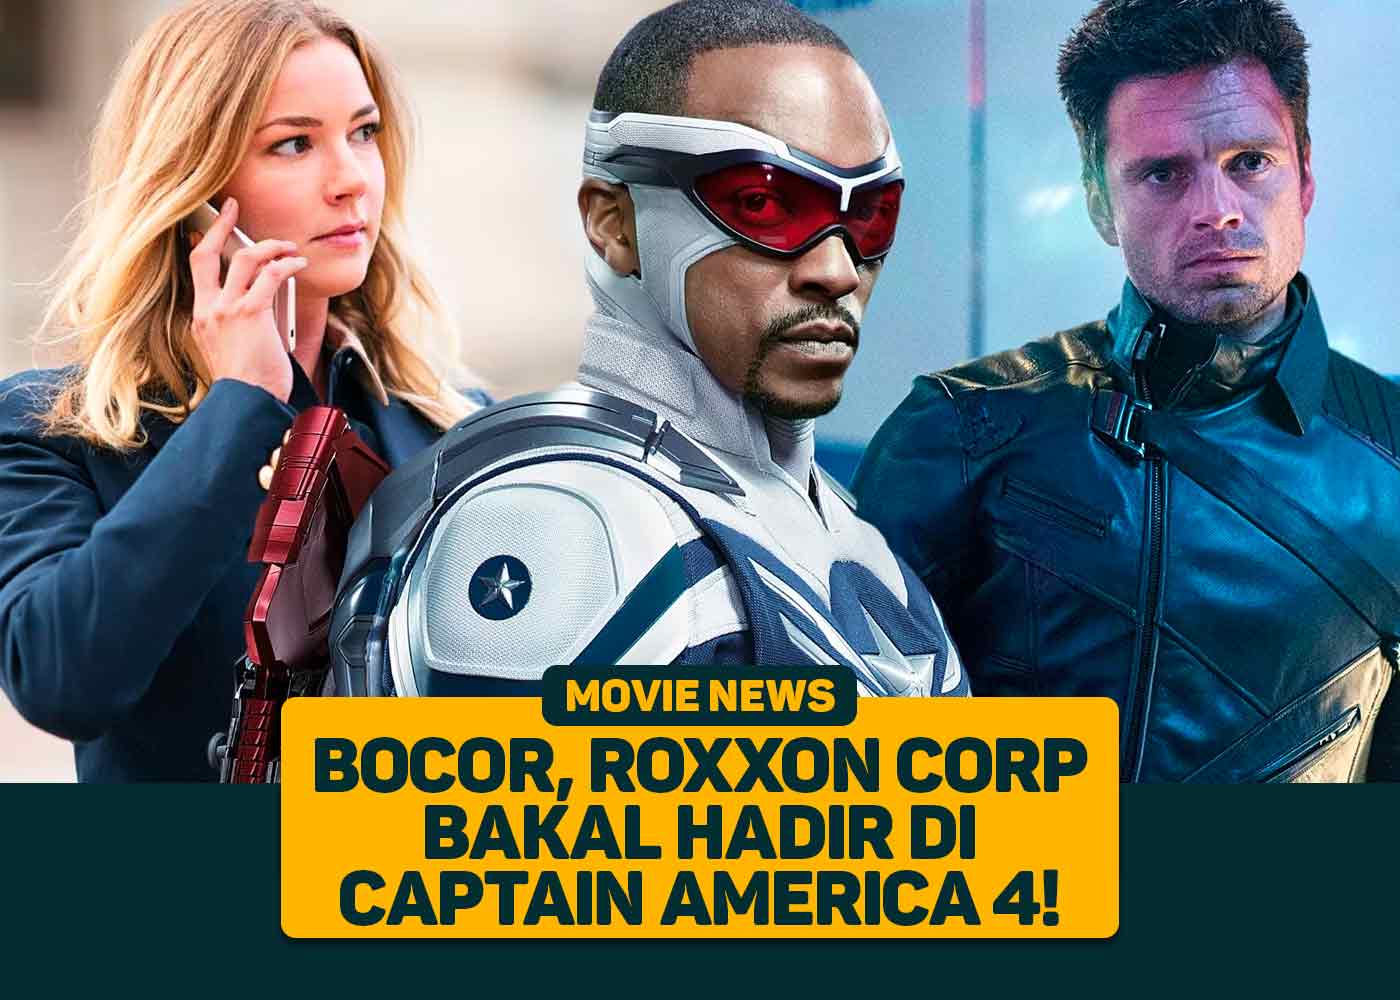 Bocor, Roxxon Corp Bakal Hadir di Captain America 4!